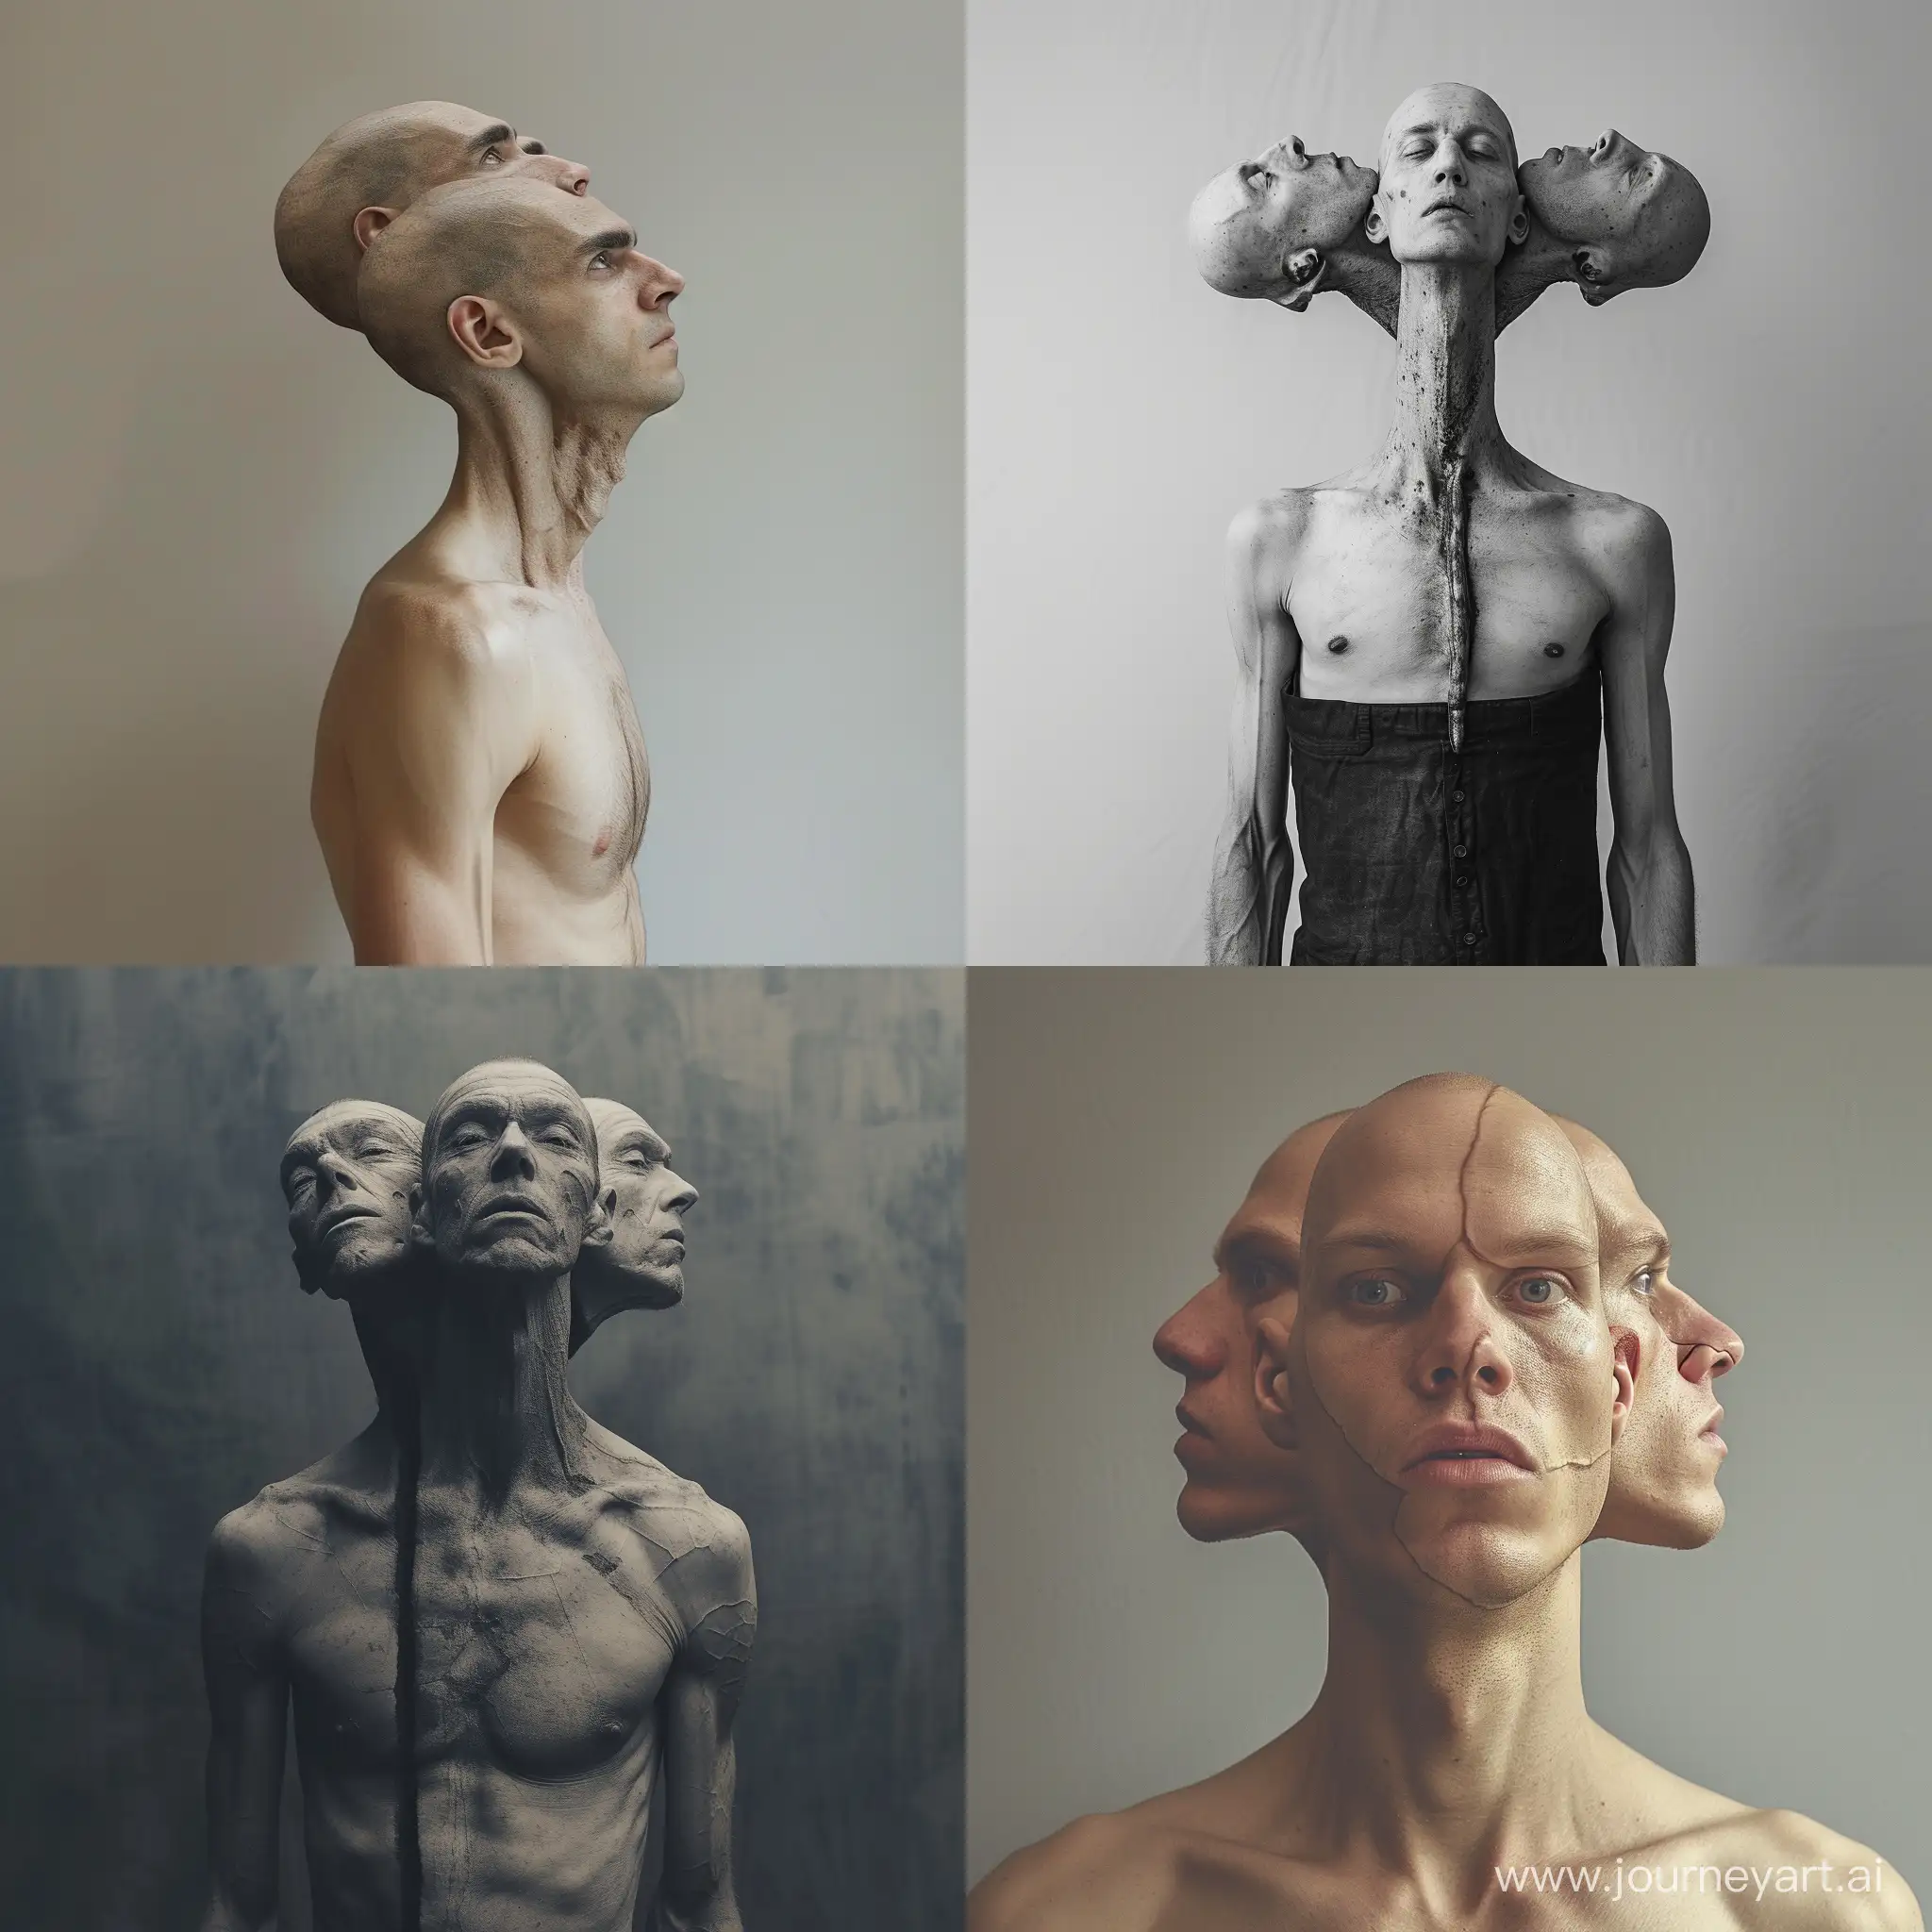 Surreal-Triheaded-Man-Unique-Figure-with-Multiple-Faces